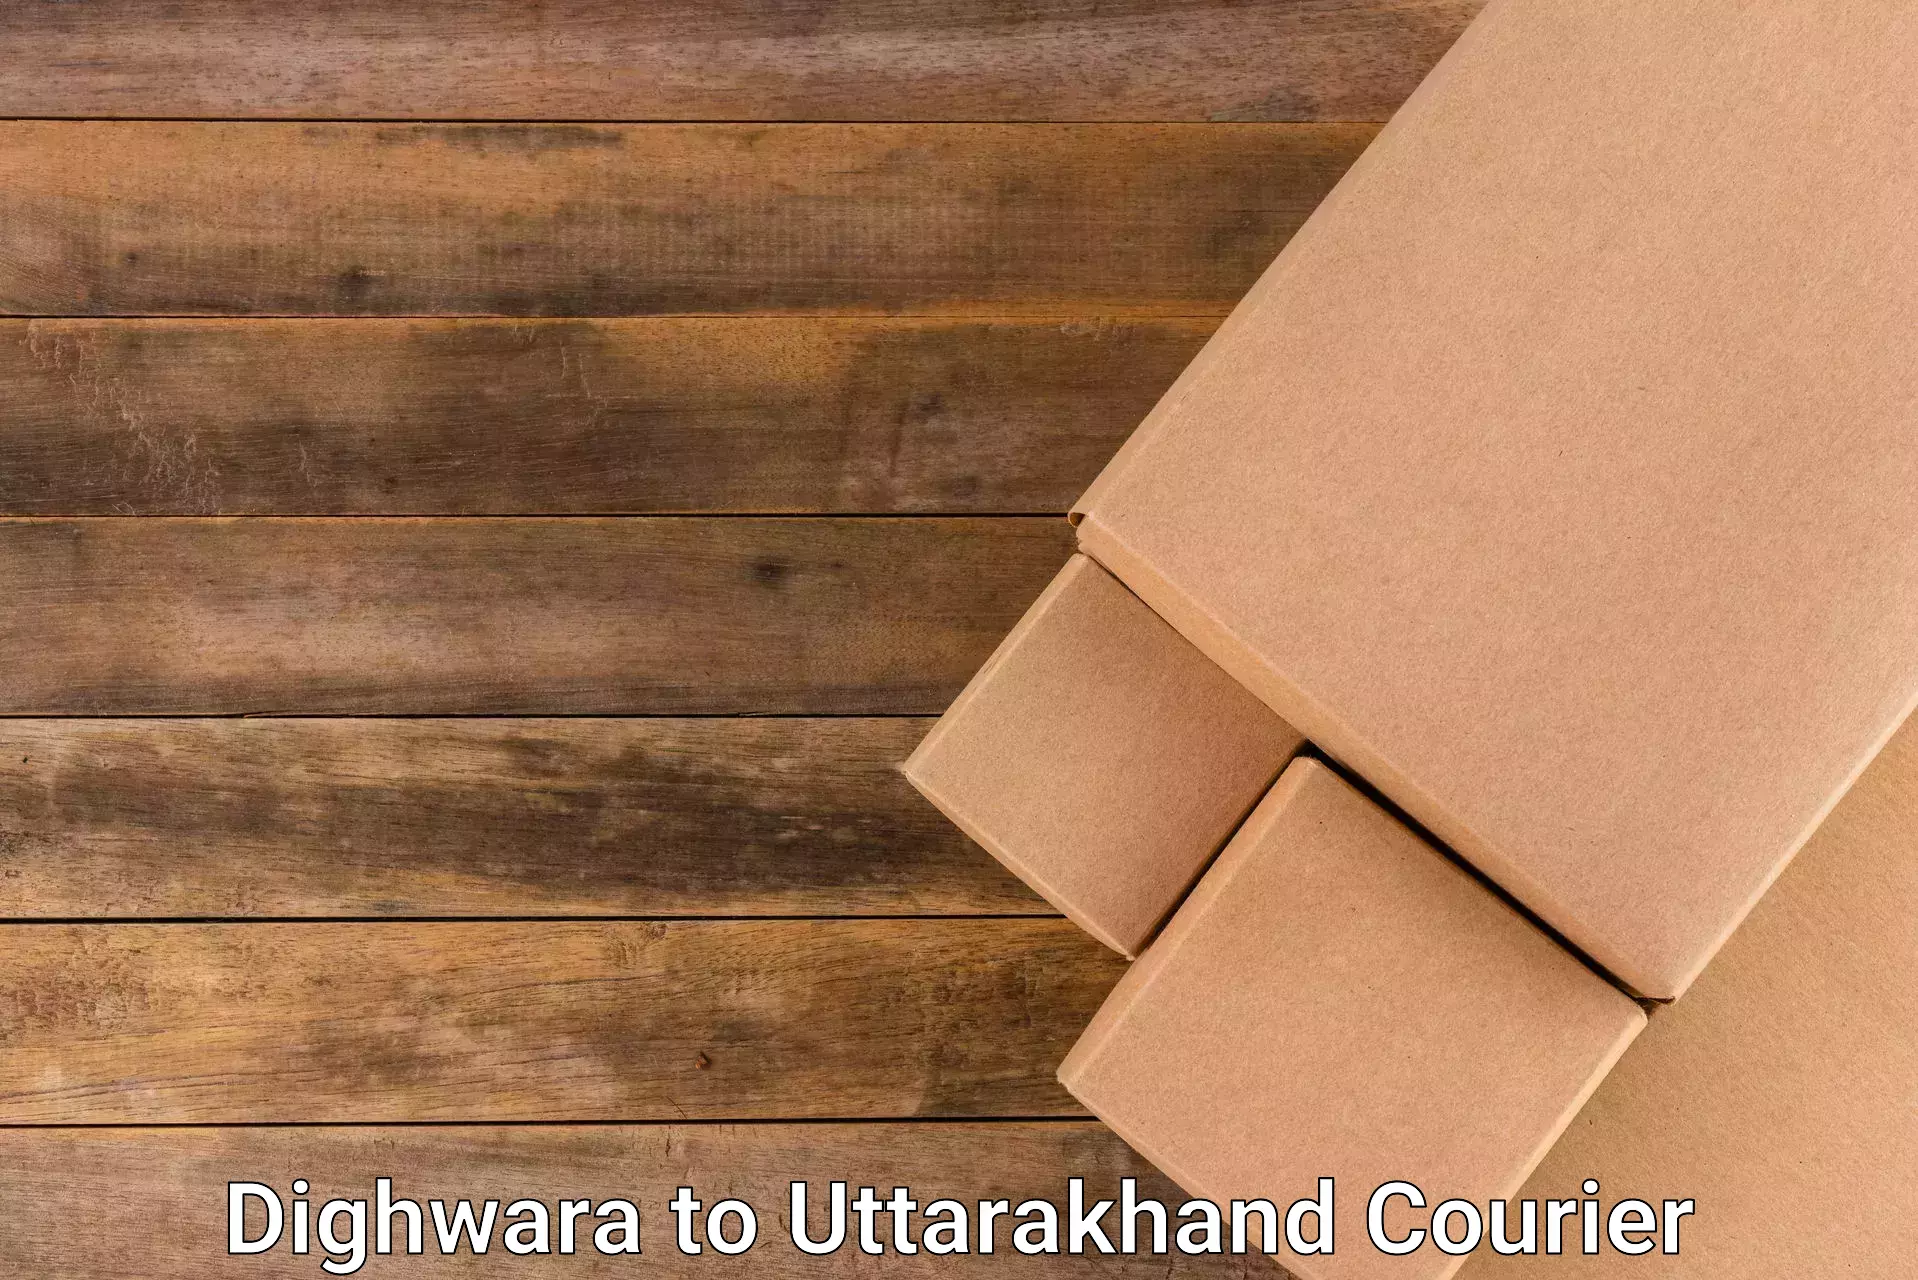 Business delivery service Dighwara to Uttarakhand